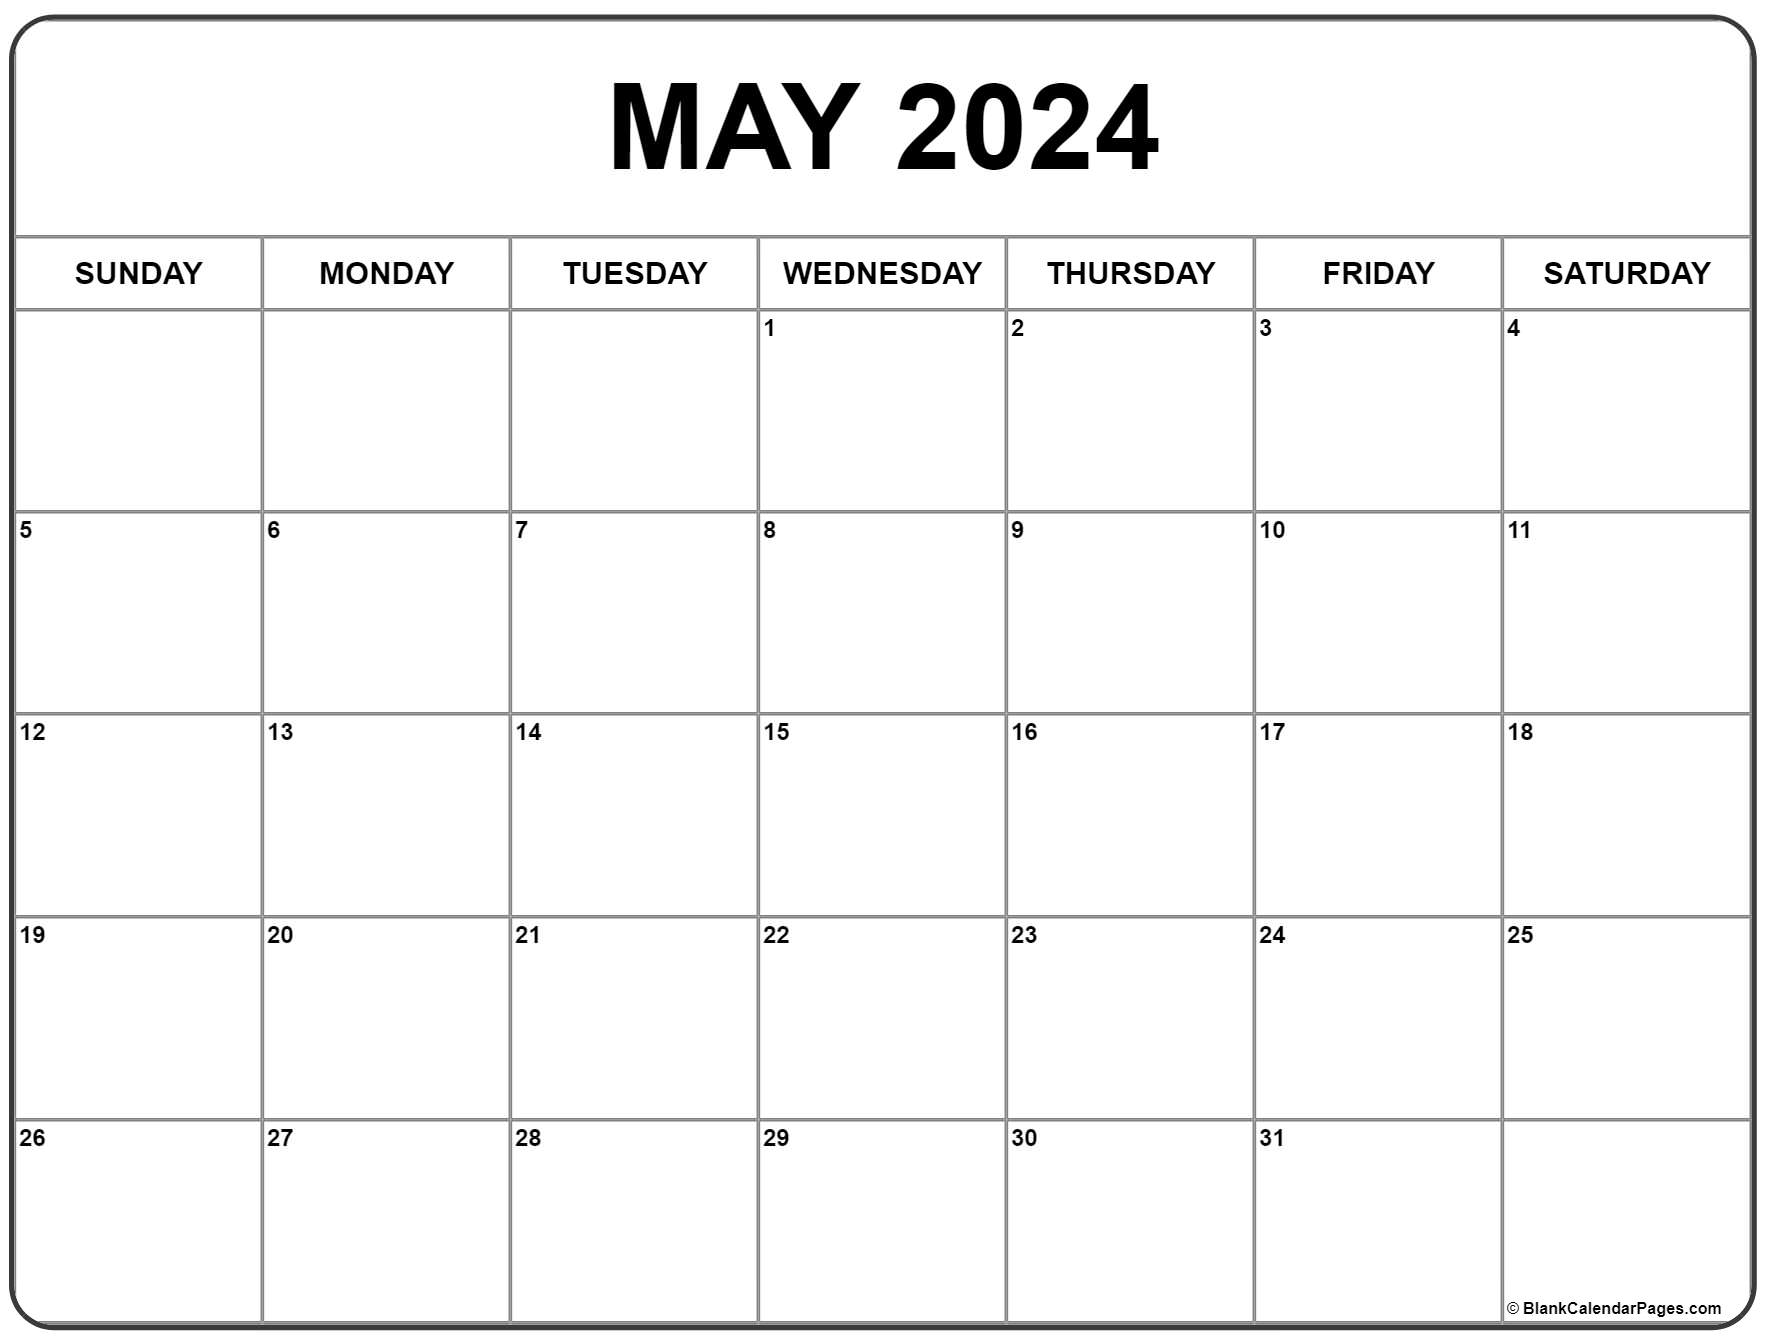 May 2024 Calendar | Free Printable Calendar for Free Printable May 2024 Calendar Template